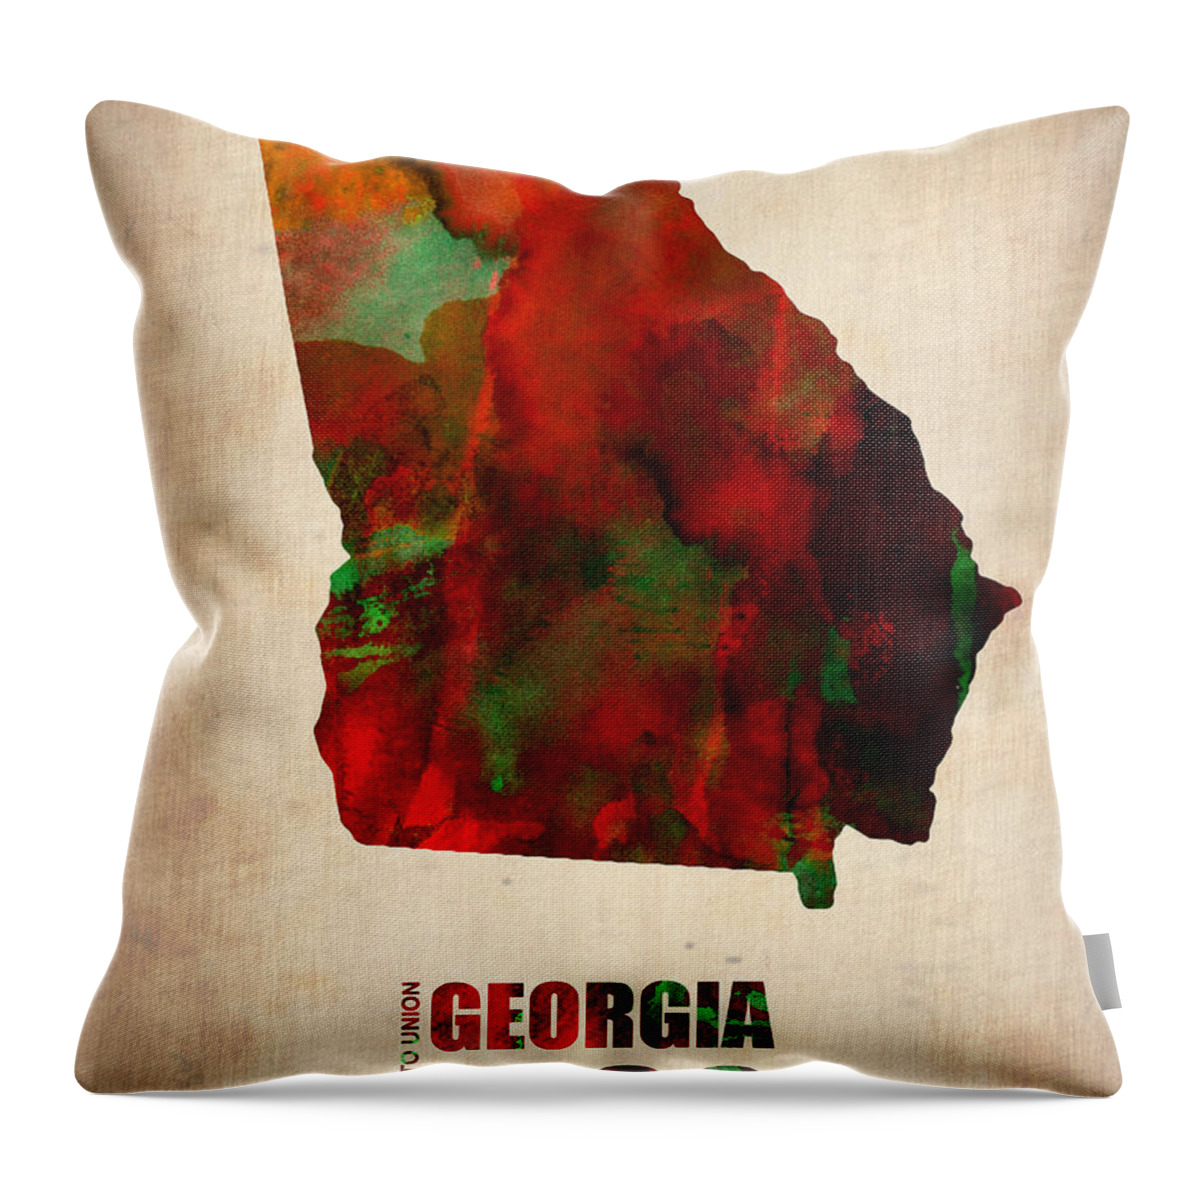 Georgia Throw Pillow featuring the digital art Georgia Watercolor Map by Naxart Studio